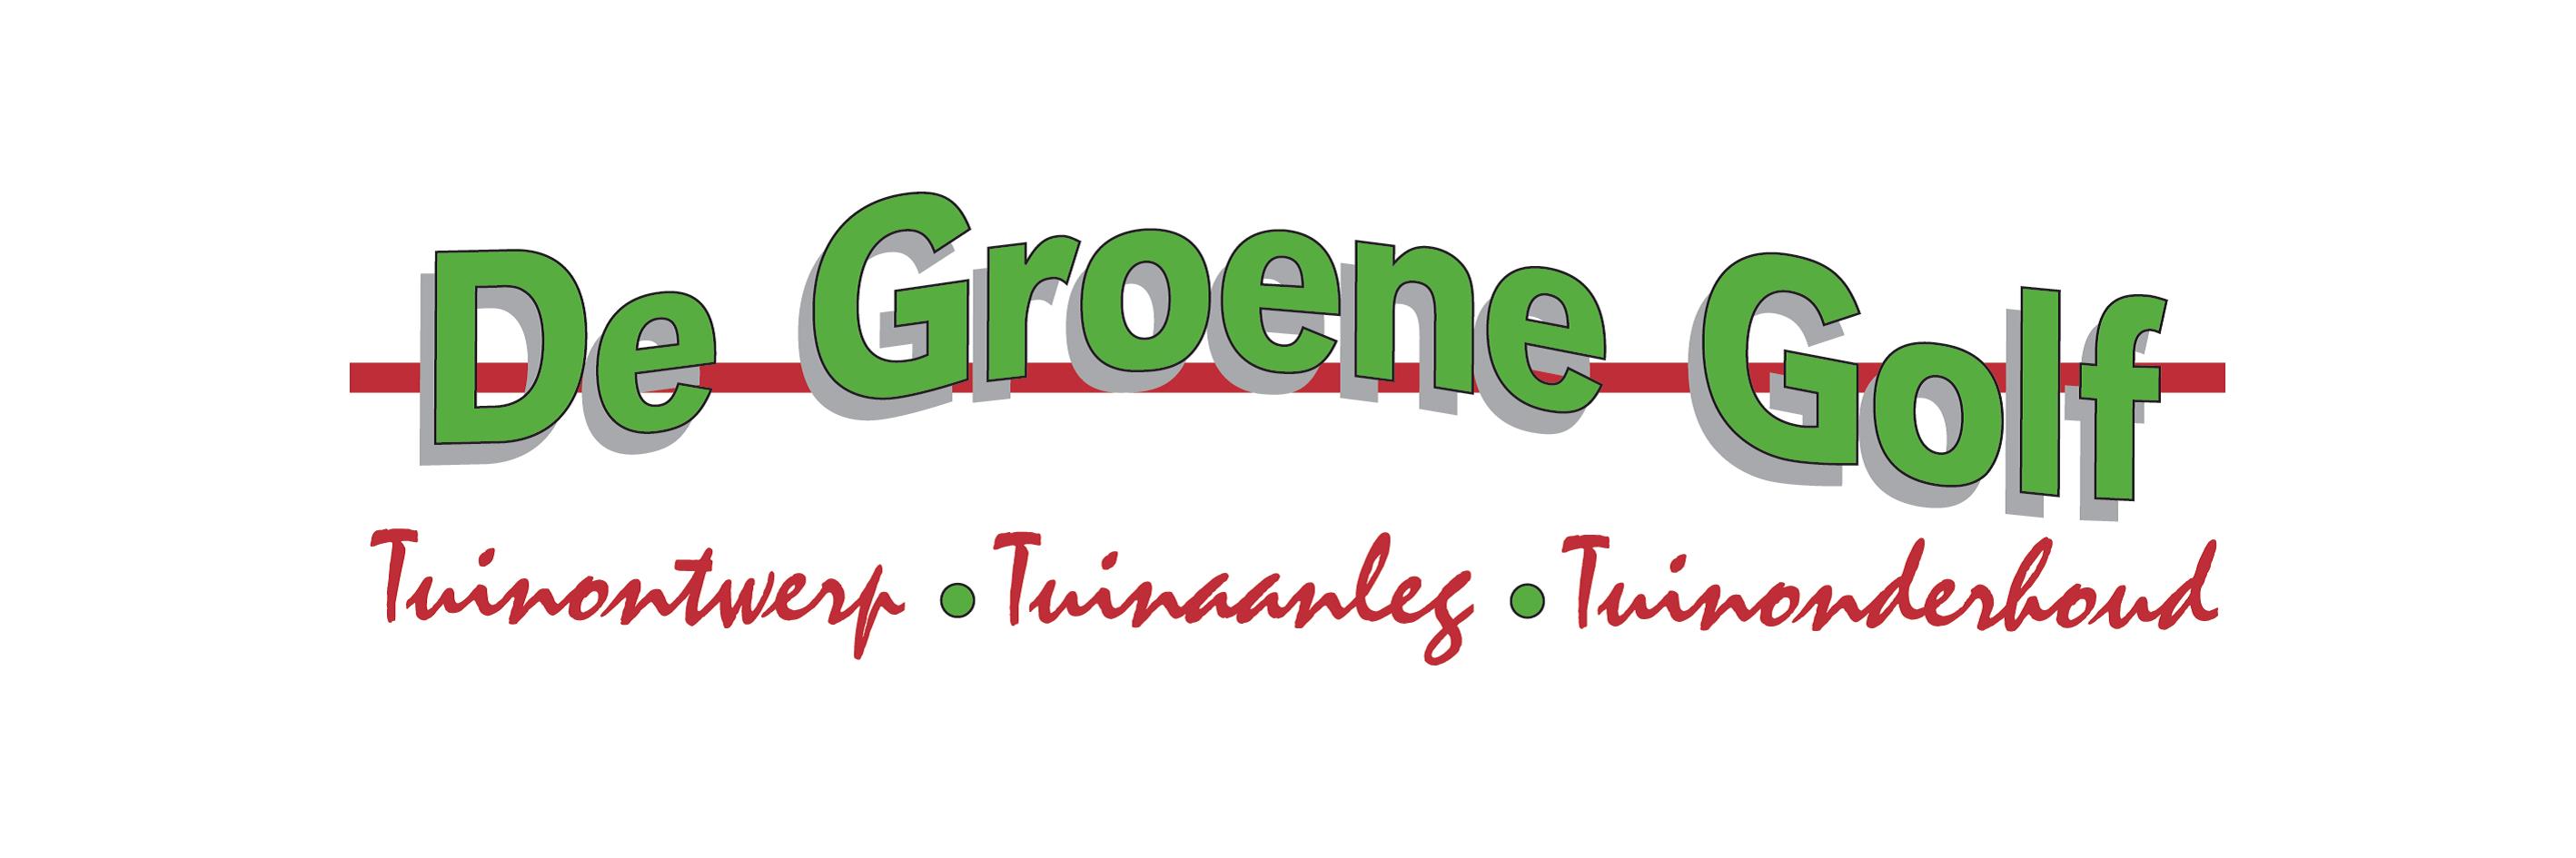 De Groene Golf logo